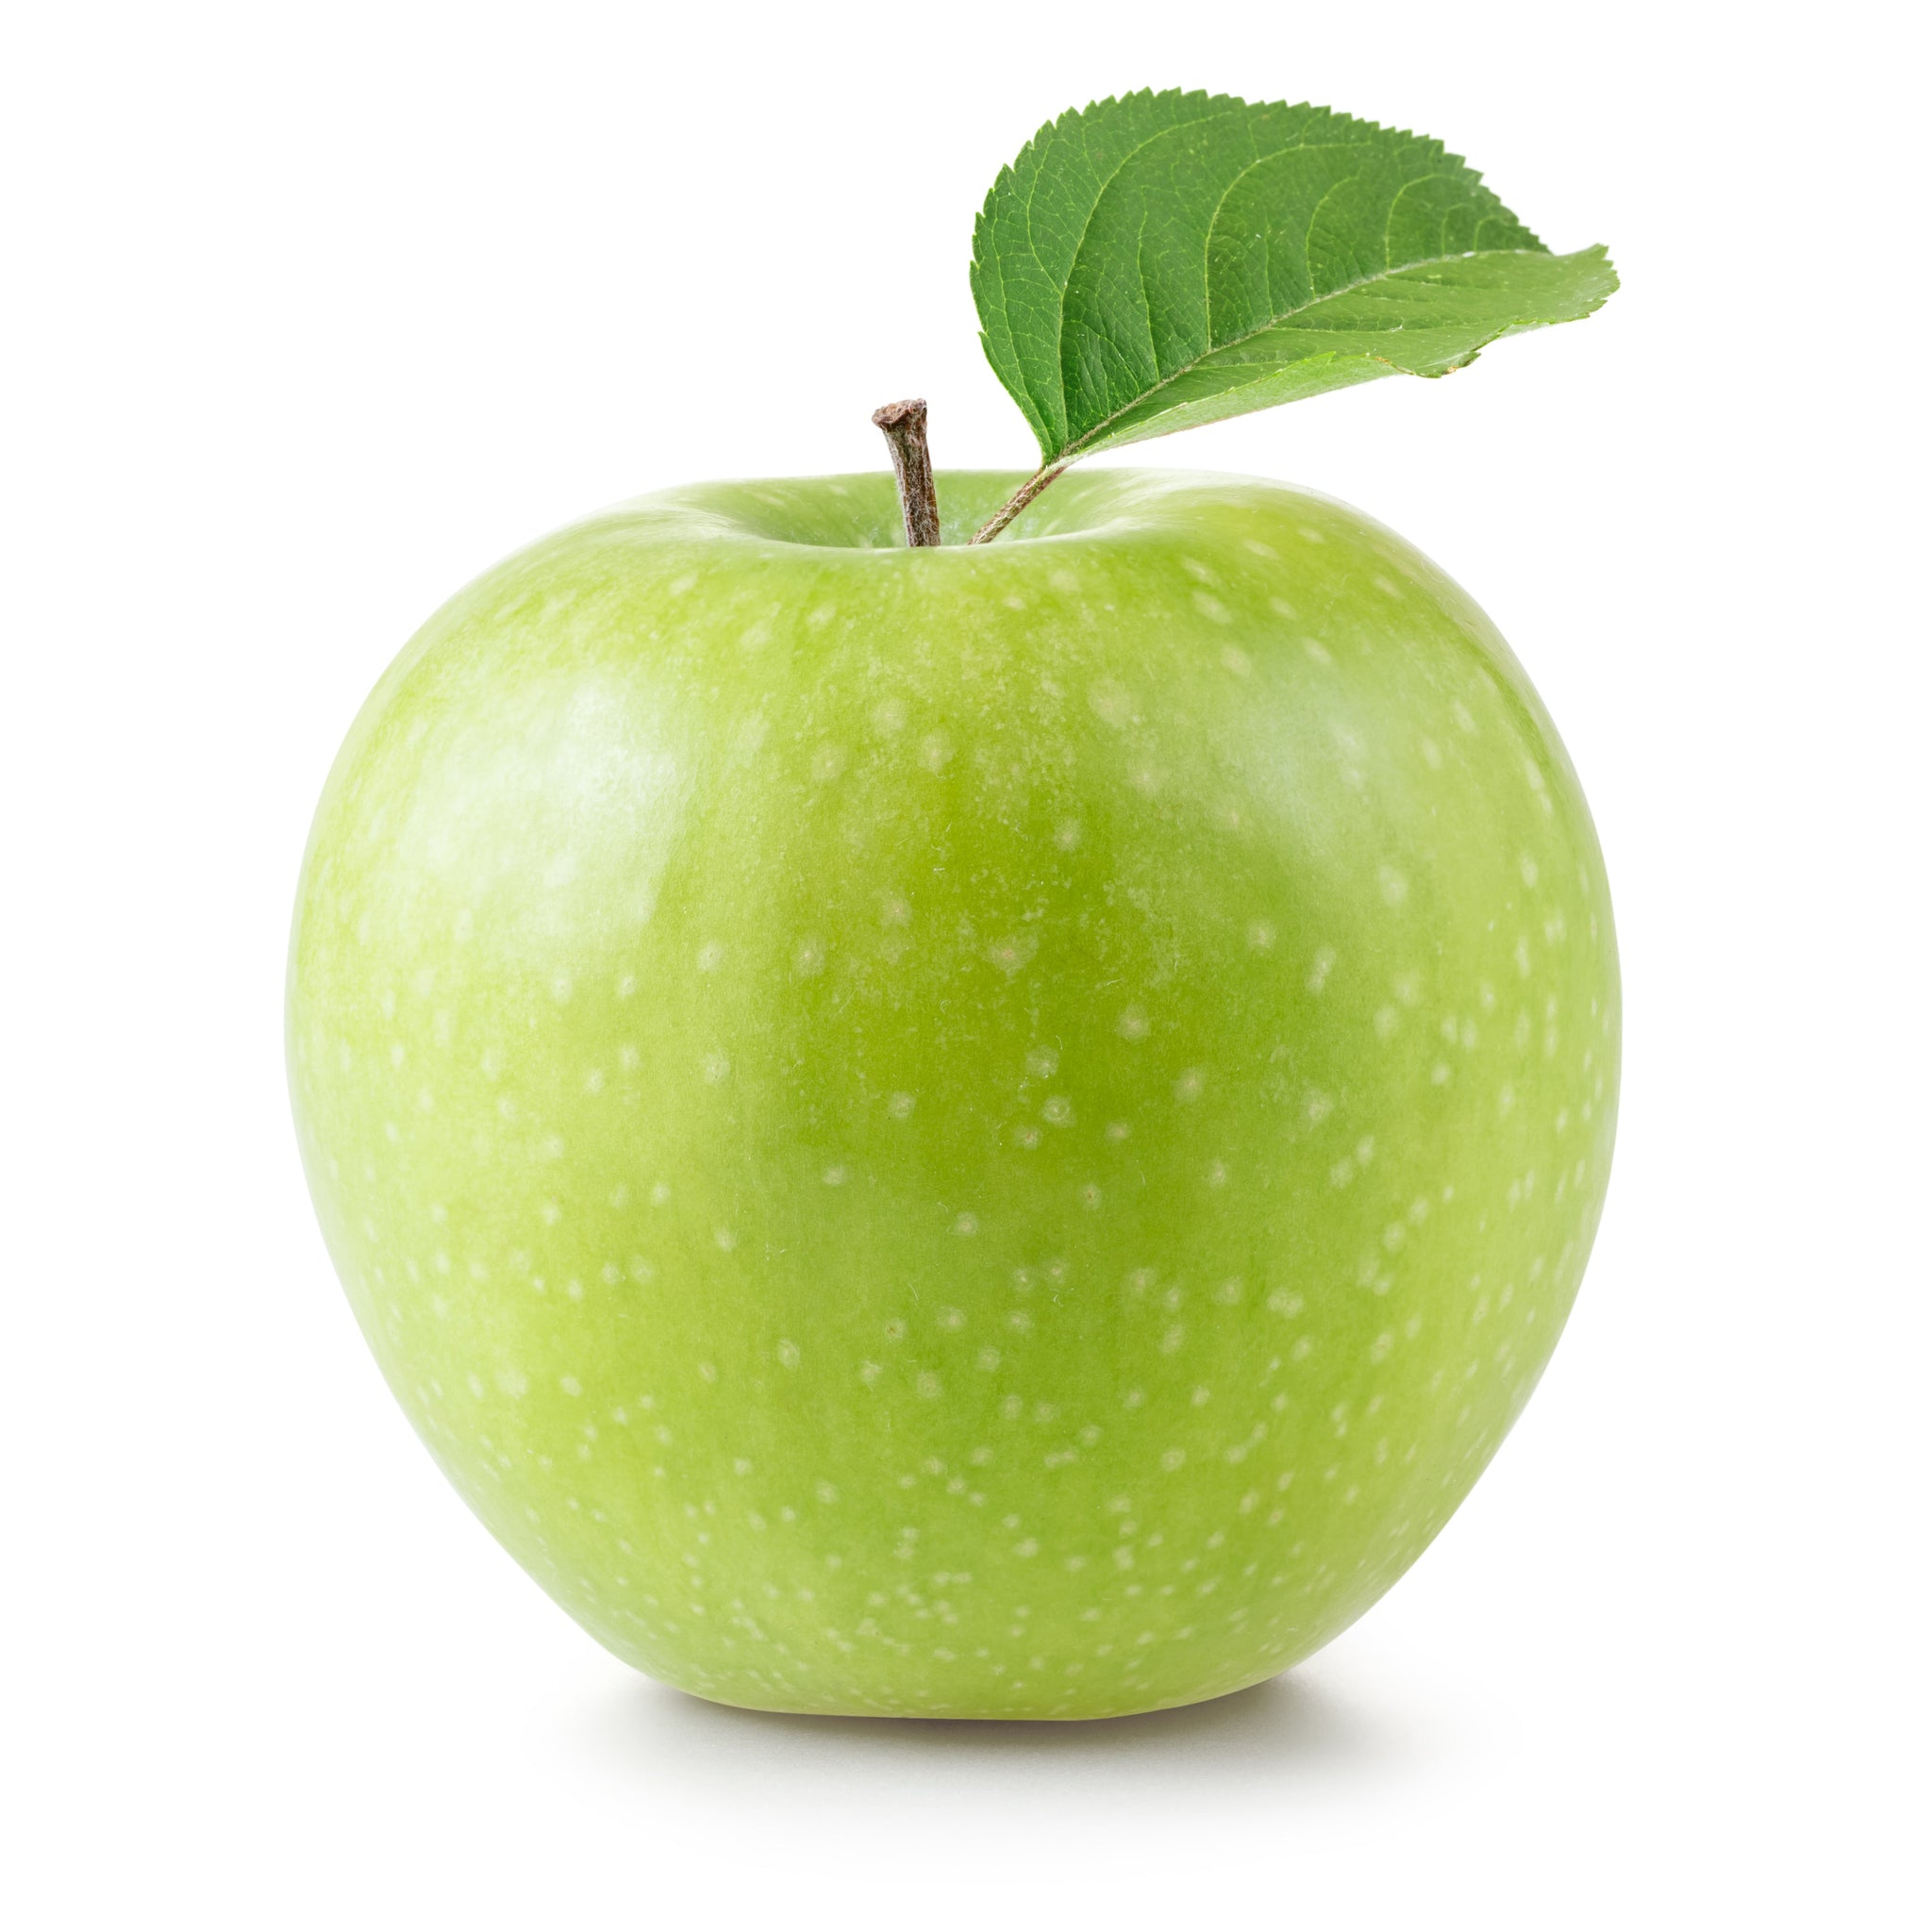 stl>Apples, Granny Smith (1 Apple)